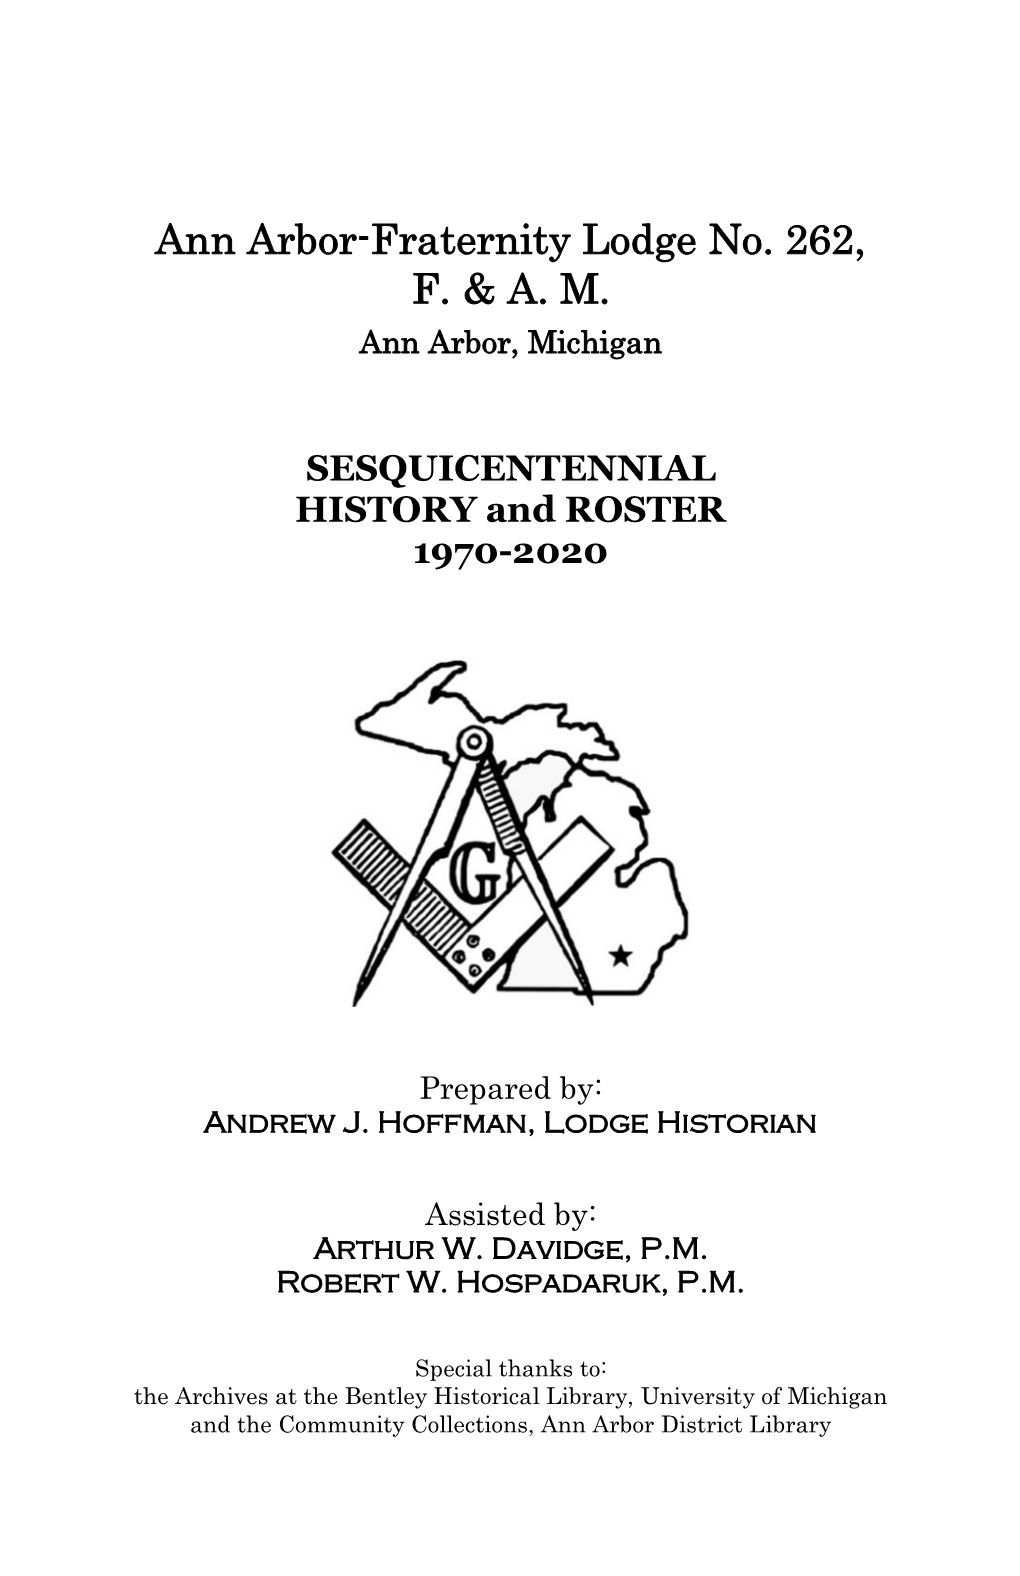 Sesquicentennial History (1970-2020)